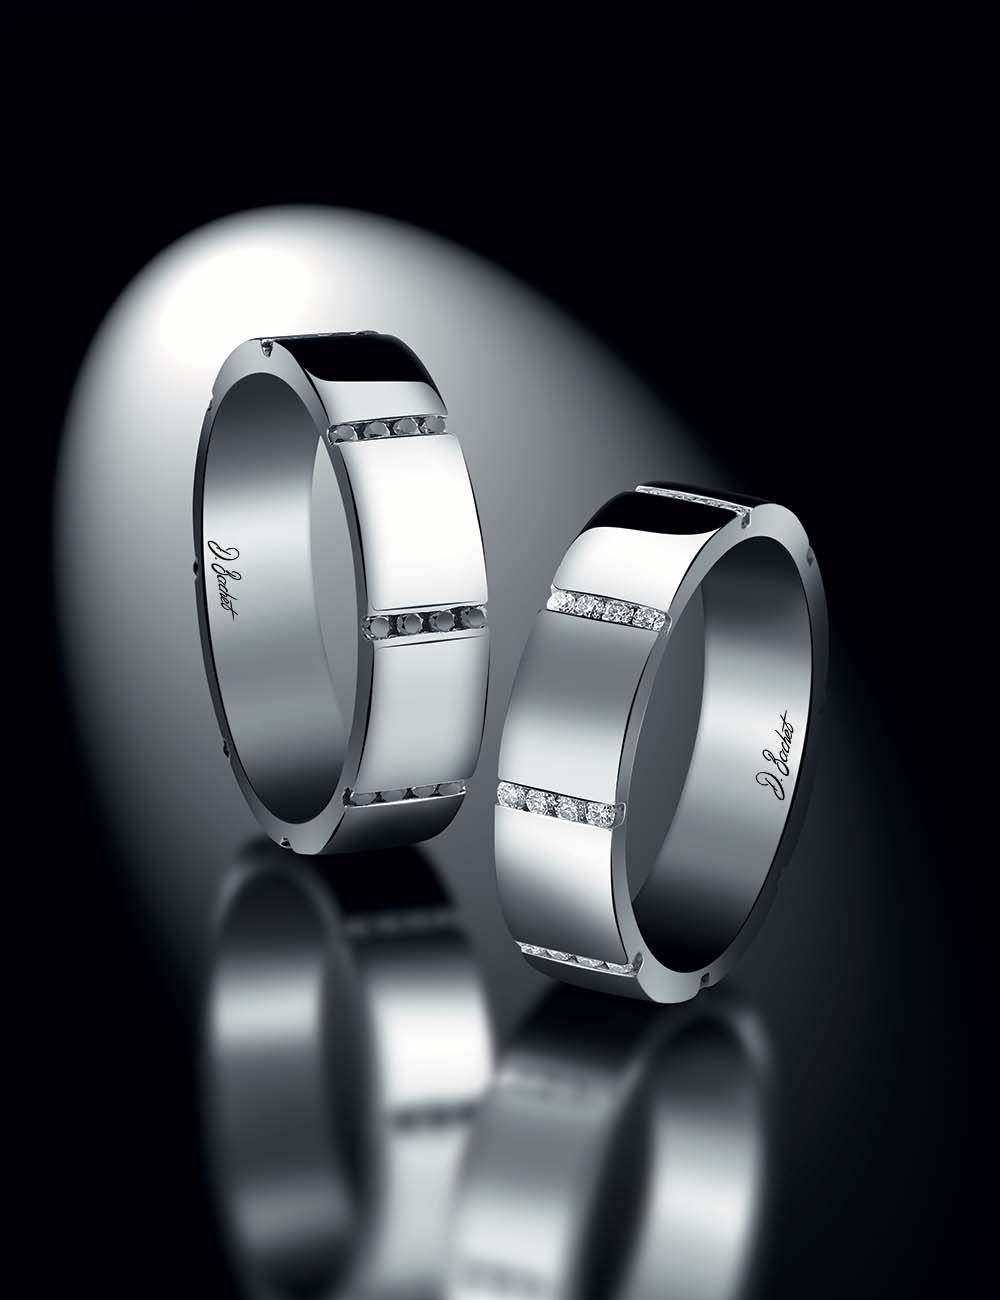 6mm men's platinum wedding band with black diamonds, offering unique contrast in a sleek, graphic design.